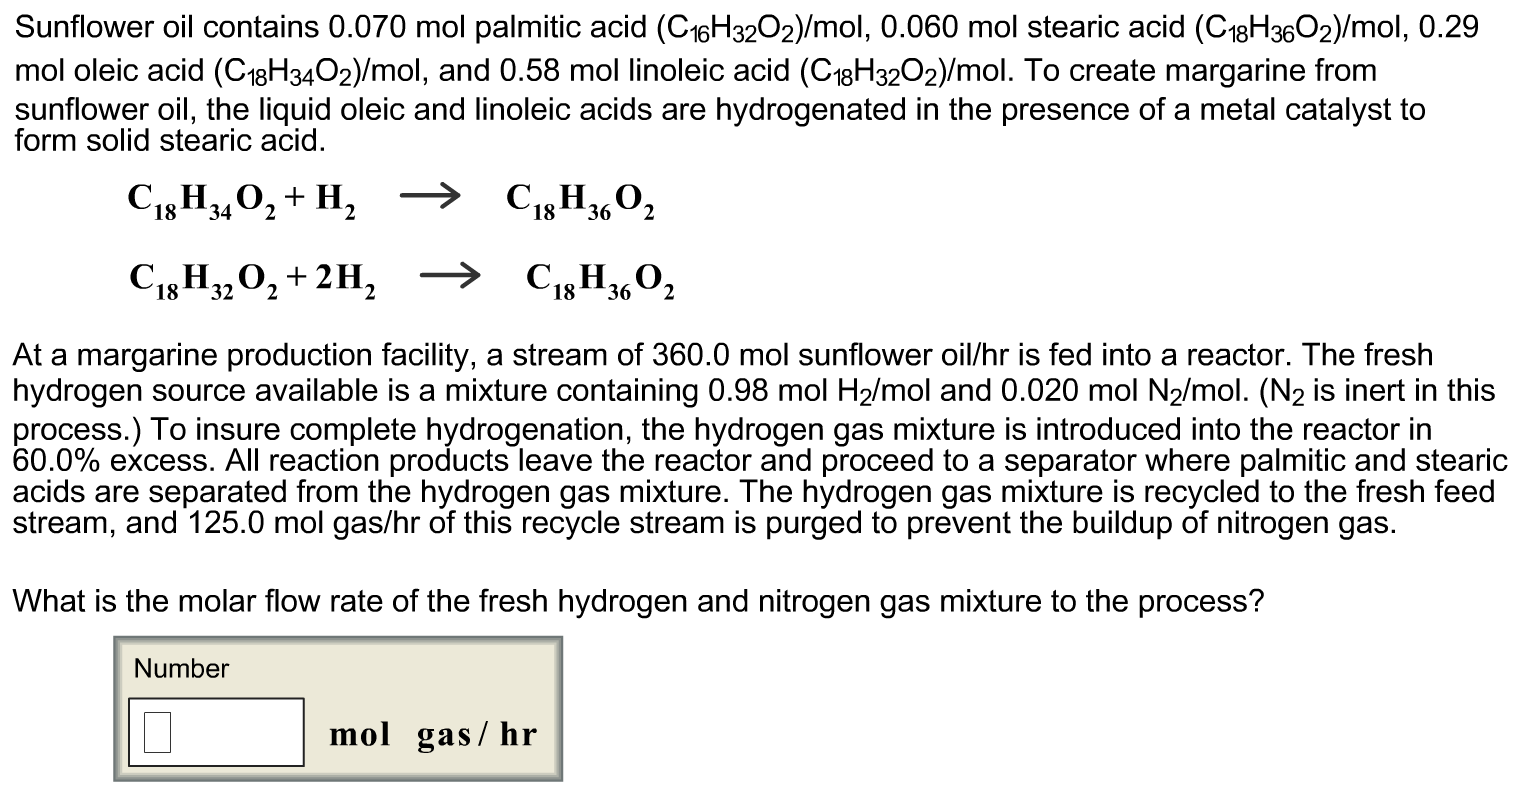 Stearic Acid, C18H36O2